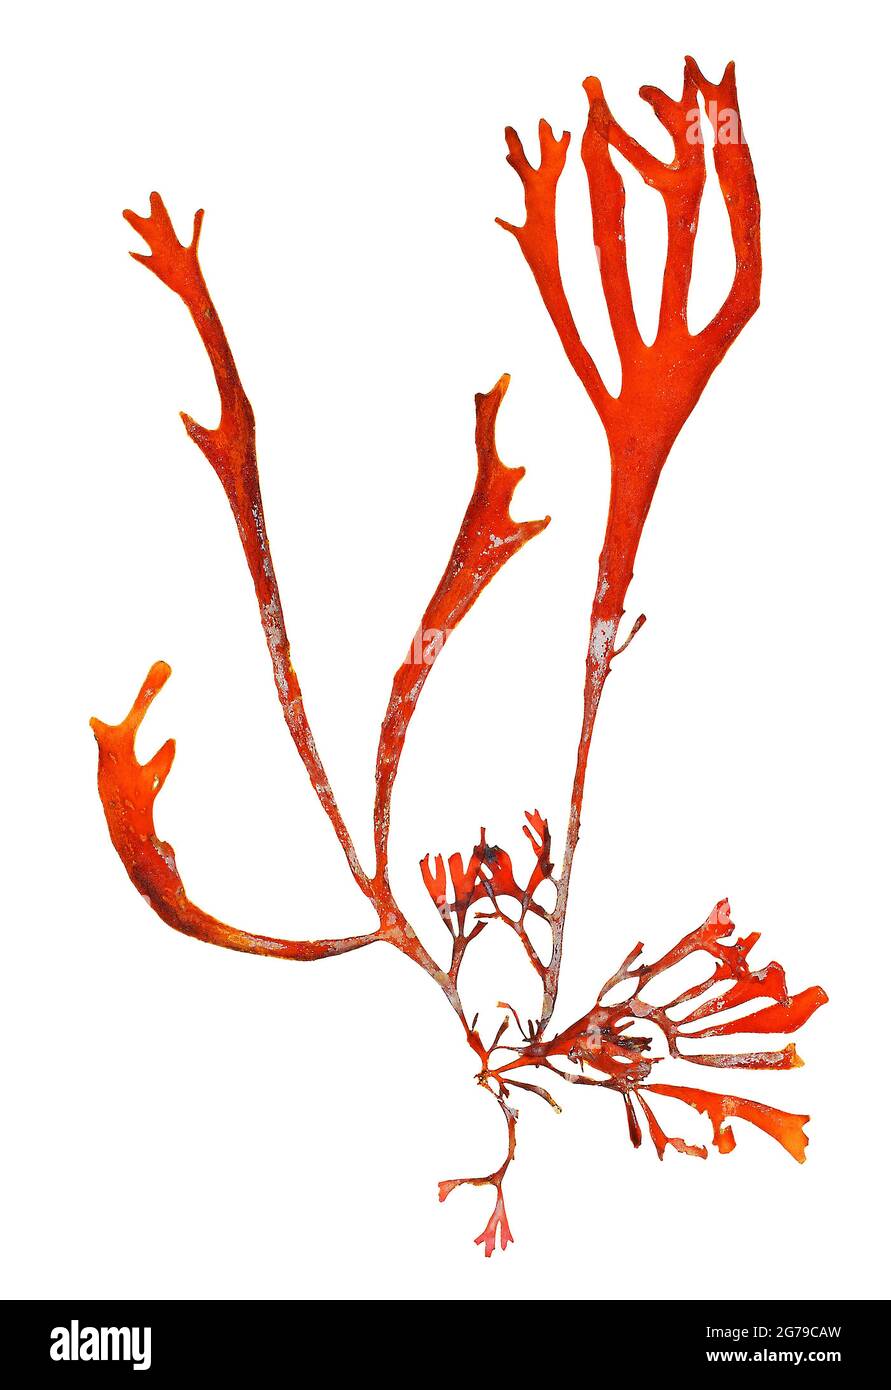 Gracilaria red alga hi-res stock photography and images - Alamy